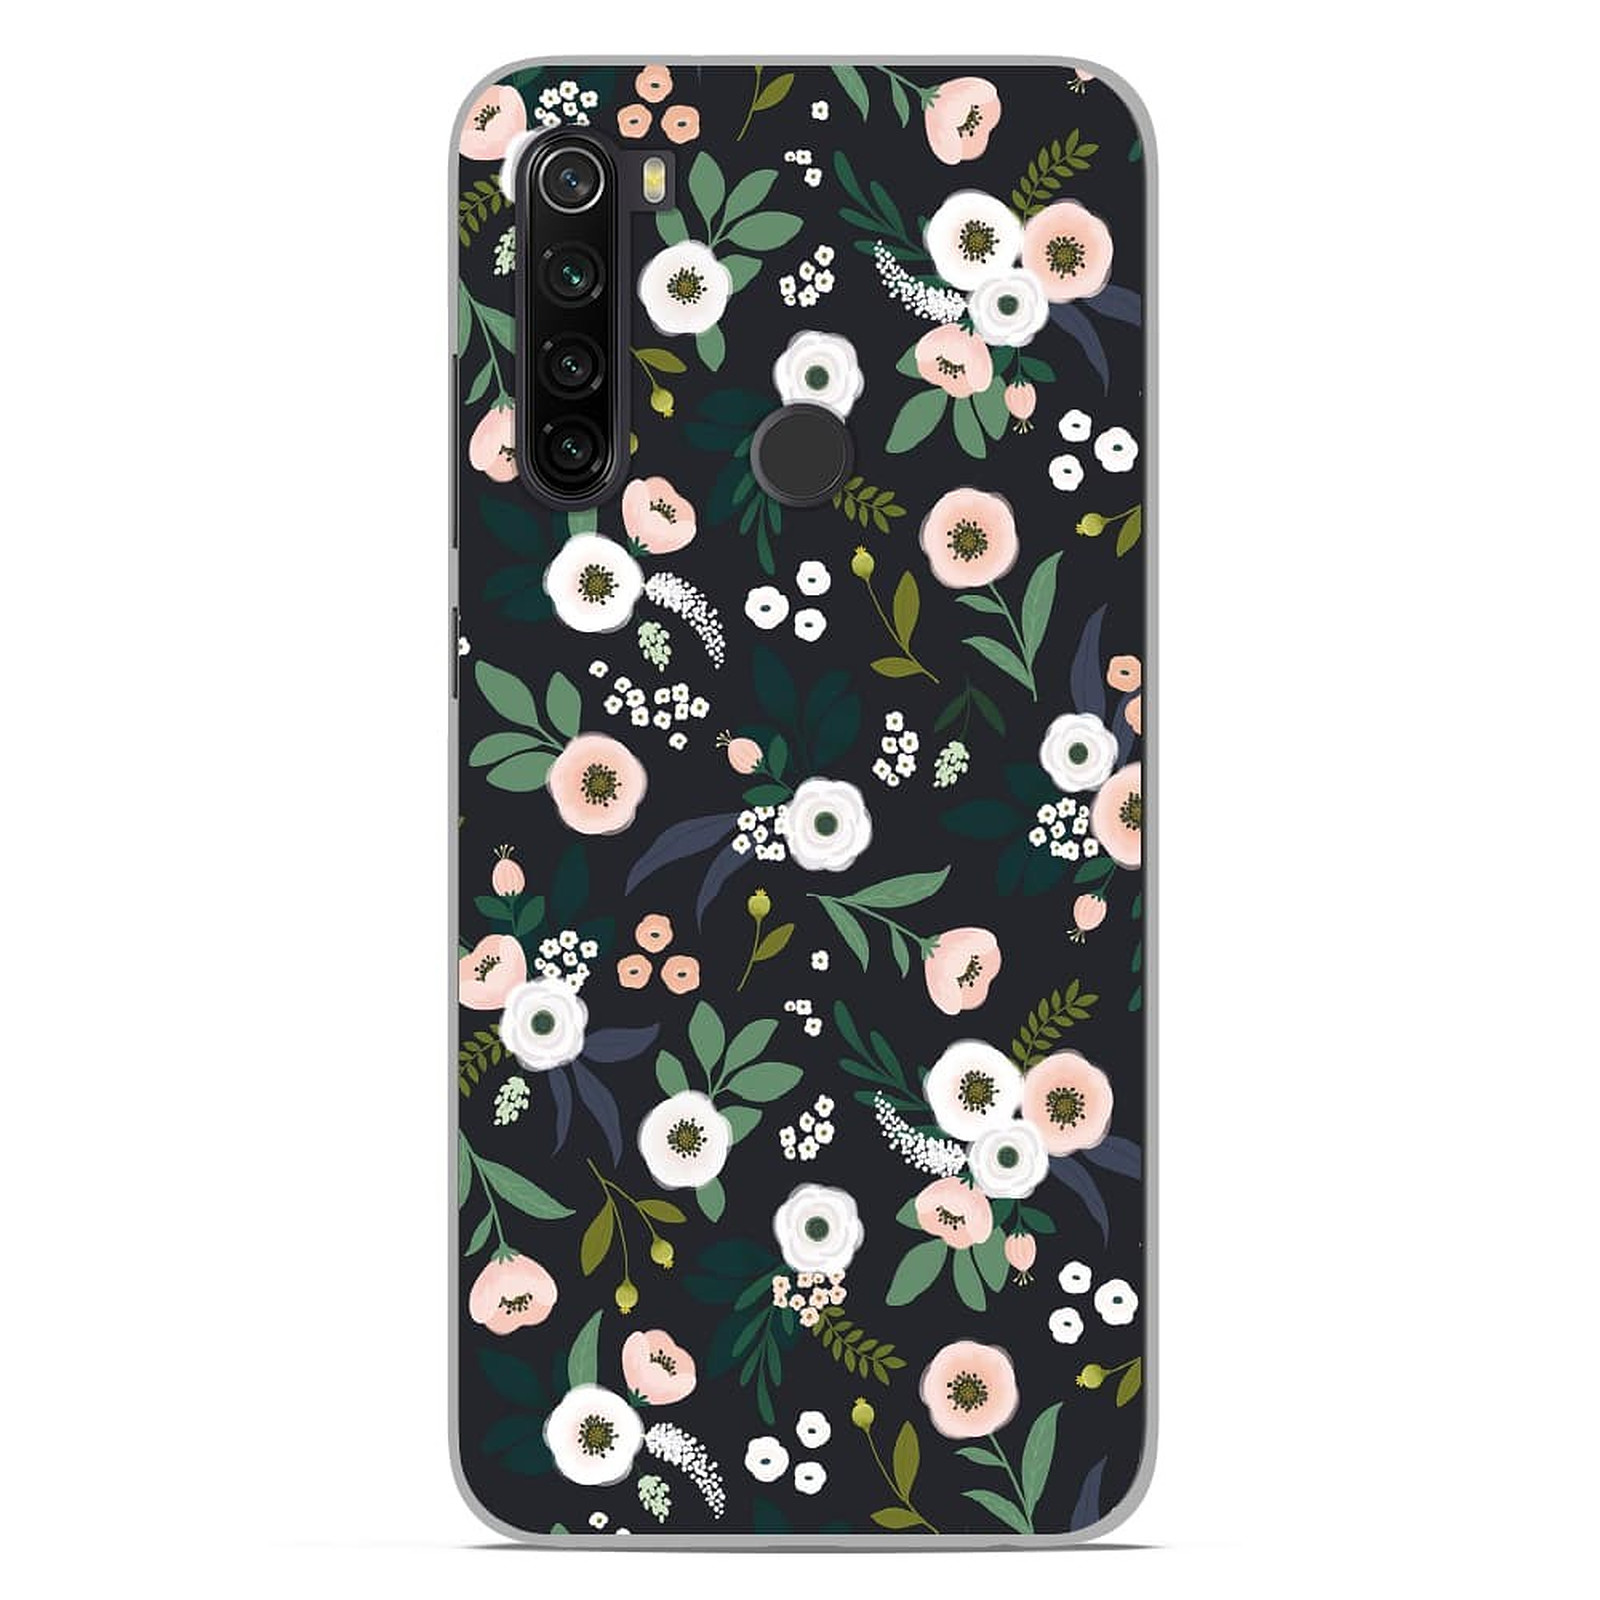 1001 Coques Coque silicone gel Xiaomi Redmi Note 8T motif Flowers Noir - Coque telephone 1001Coques